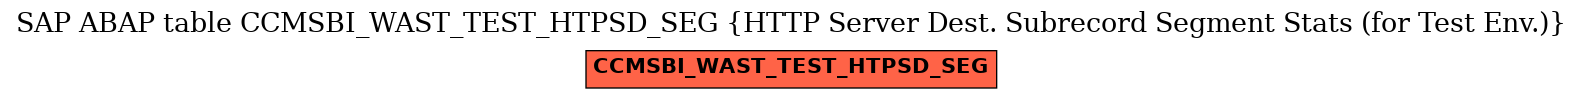 E-R Diagram for table CCMSBI_WAST_TEST_HTPSD_SEG (HTTP Server Dest. Subrecord Segment Stats (for Test Env.))